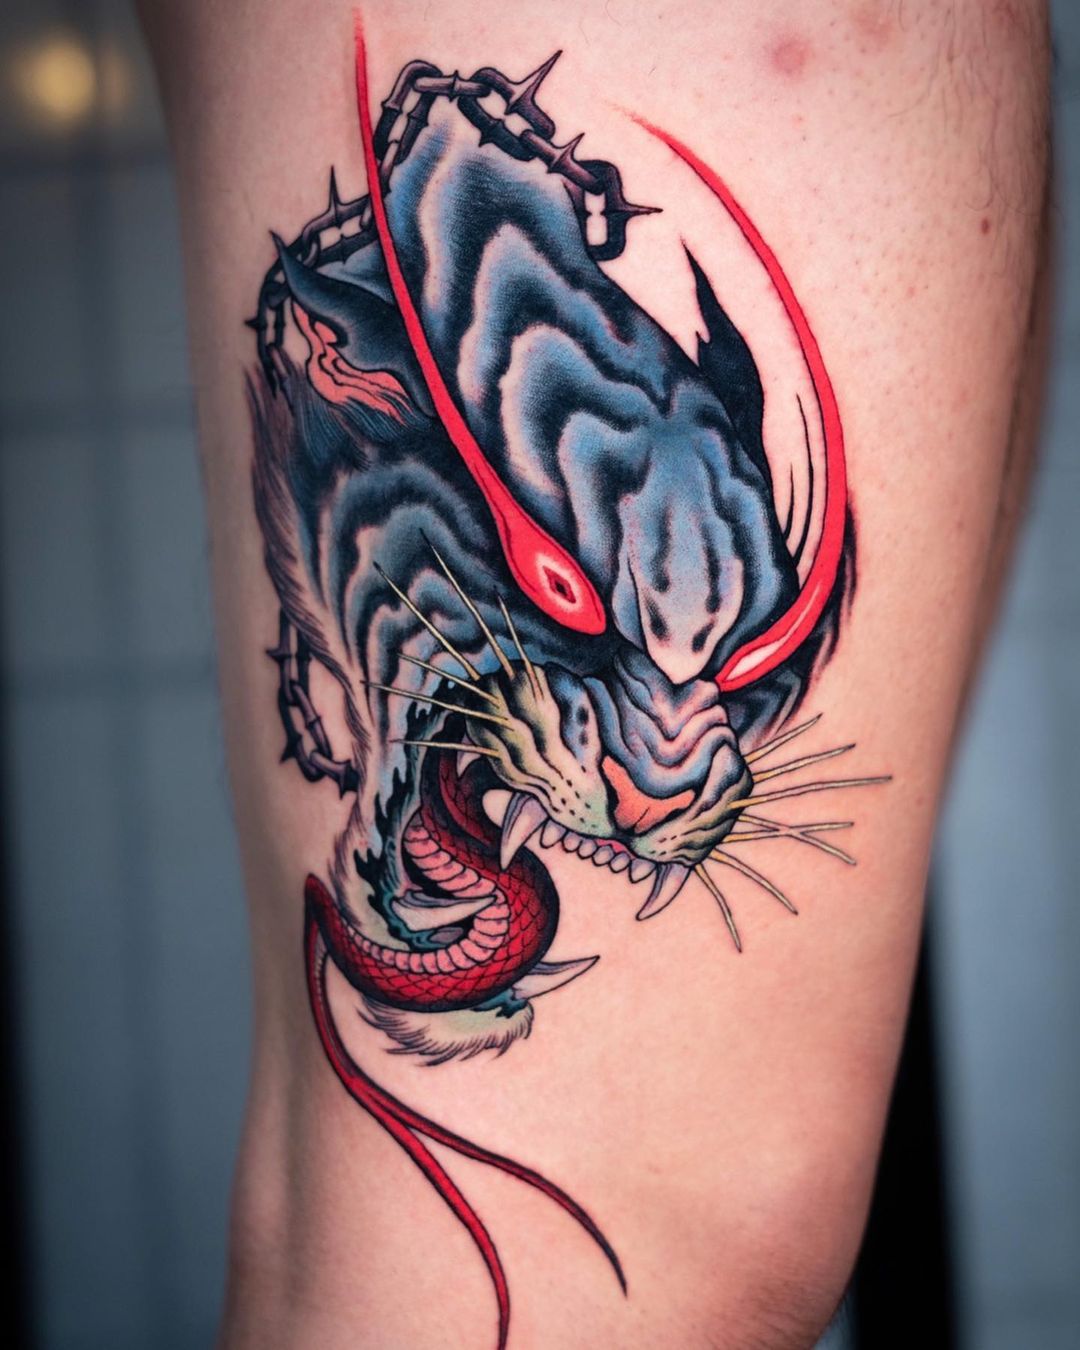 Tiger tattoo design by seoulinktattoo